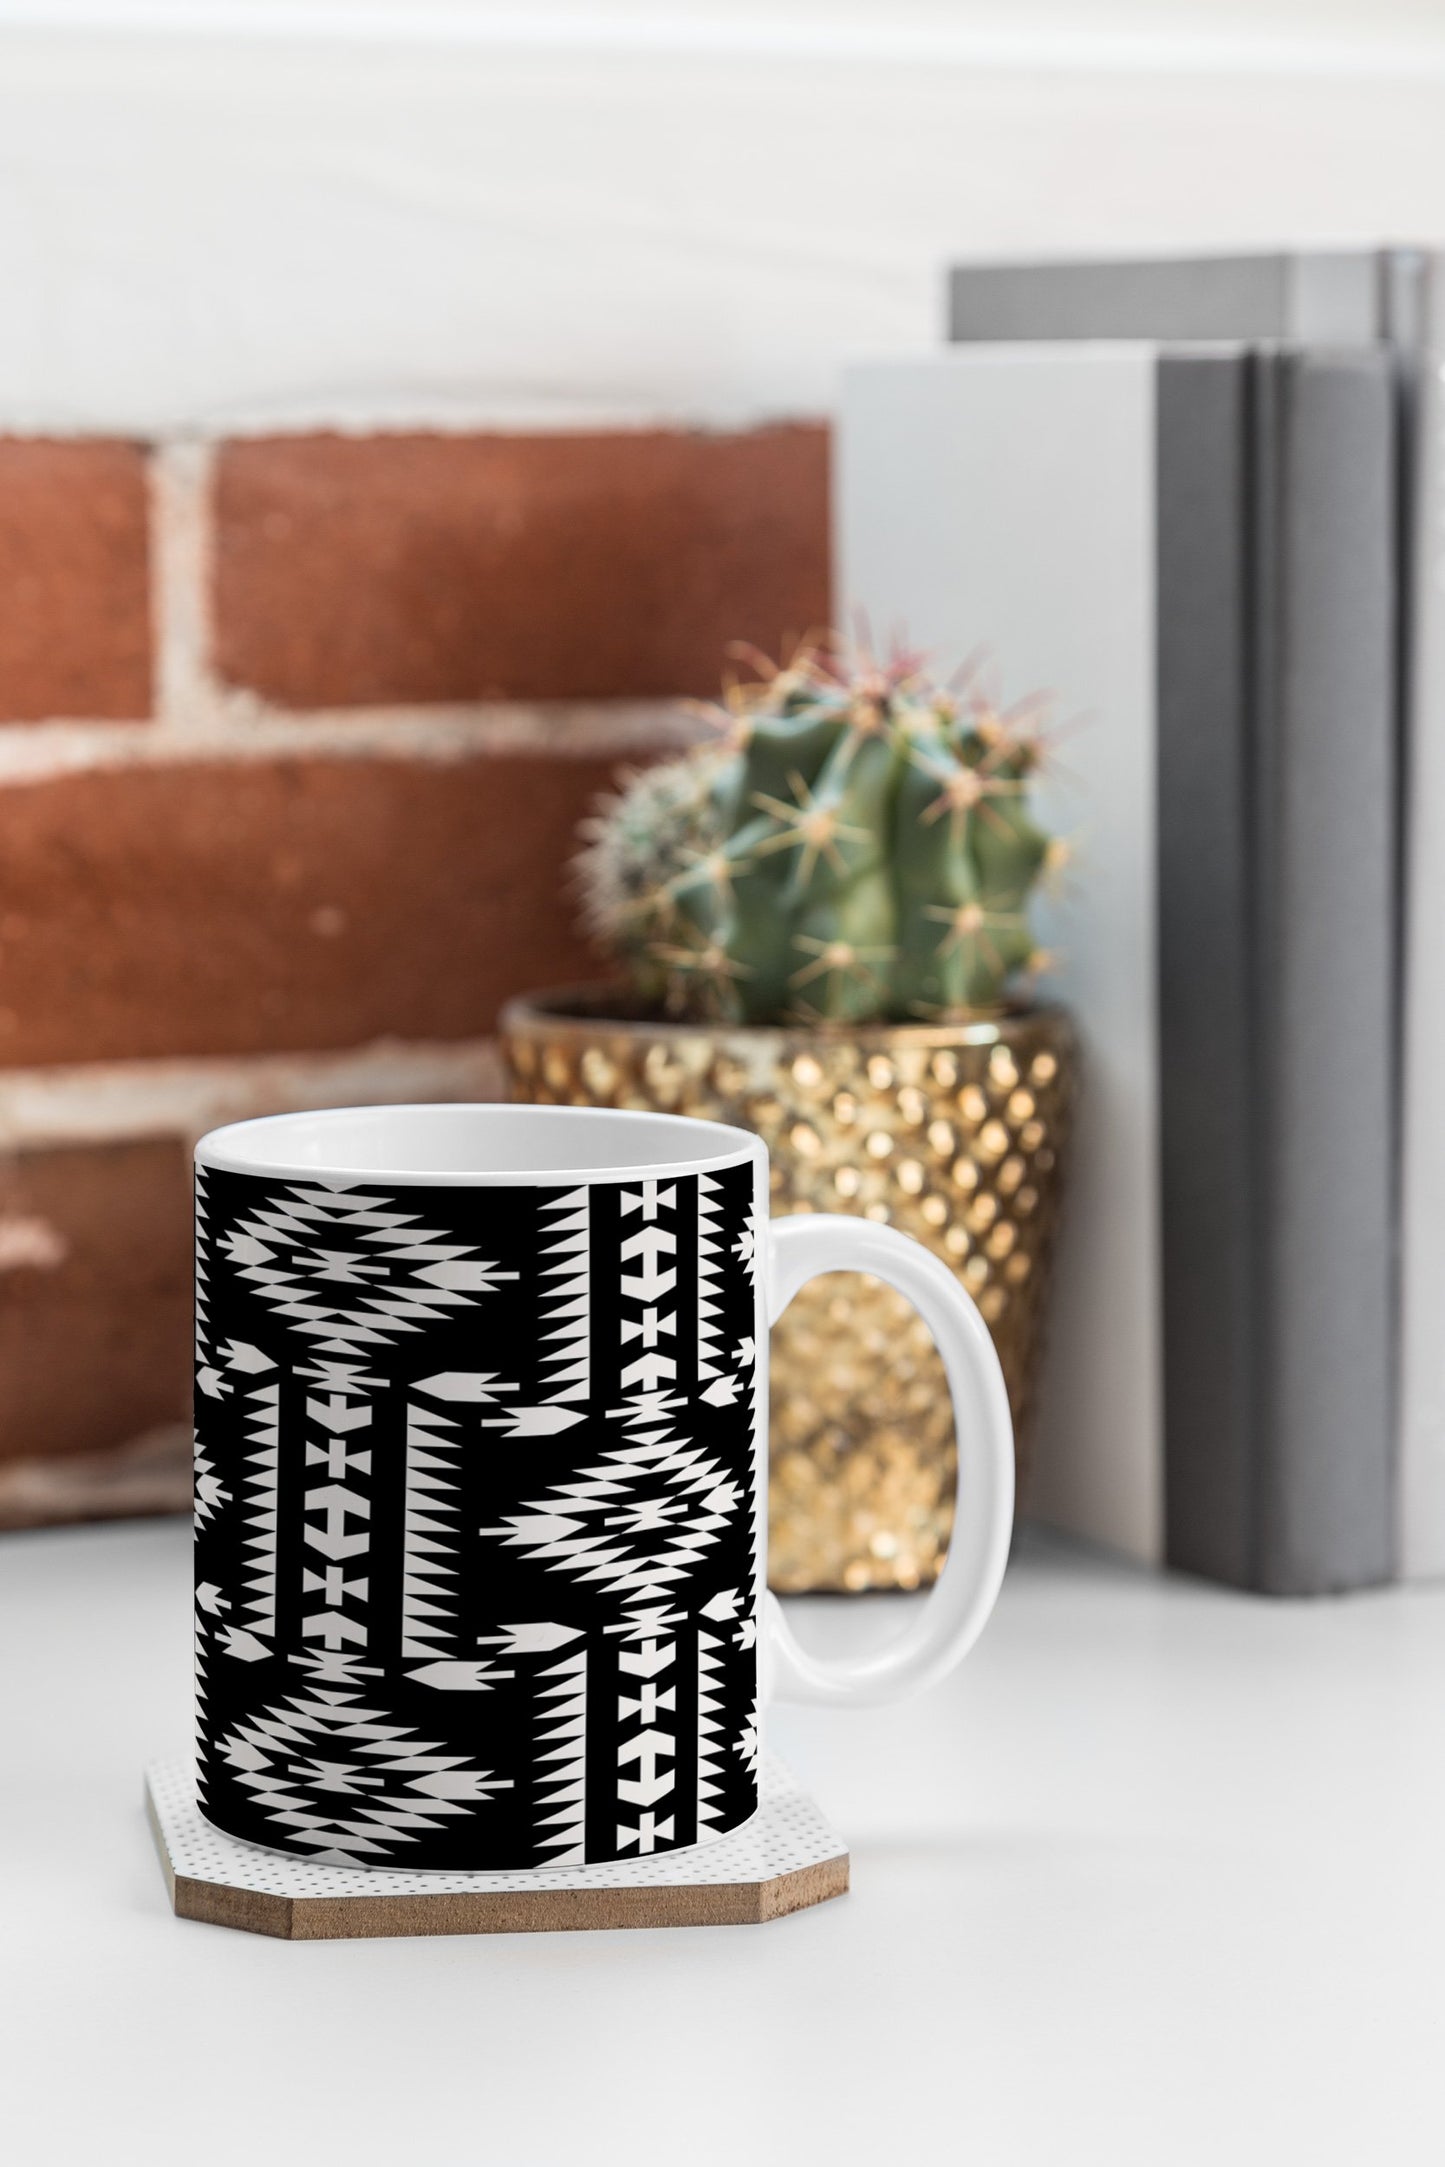 Geo Panel Aztec Mug Set -set of 2 or 4 - #aztec, aztec blanket, aztec blanket print, aztec design, aztec designs, aztec print, aztec prints, azteca, aztecc, aztecprint, aztecs, bohemian, bohemian design, boho print, boho., bohowestern, coffee, coffee cup, coffee cups, coffee mug, coffeee, cup, cups, decor, home, kitchen, mug, mugs, southwest aztec, southwestern, western, western boho -  - Baha Ranch Western Wear